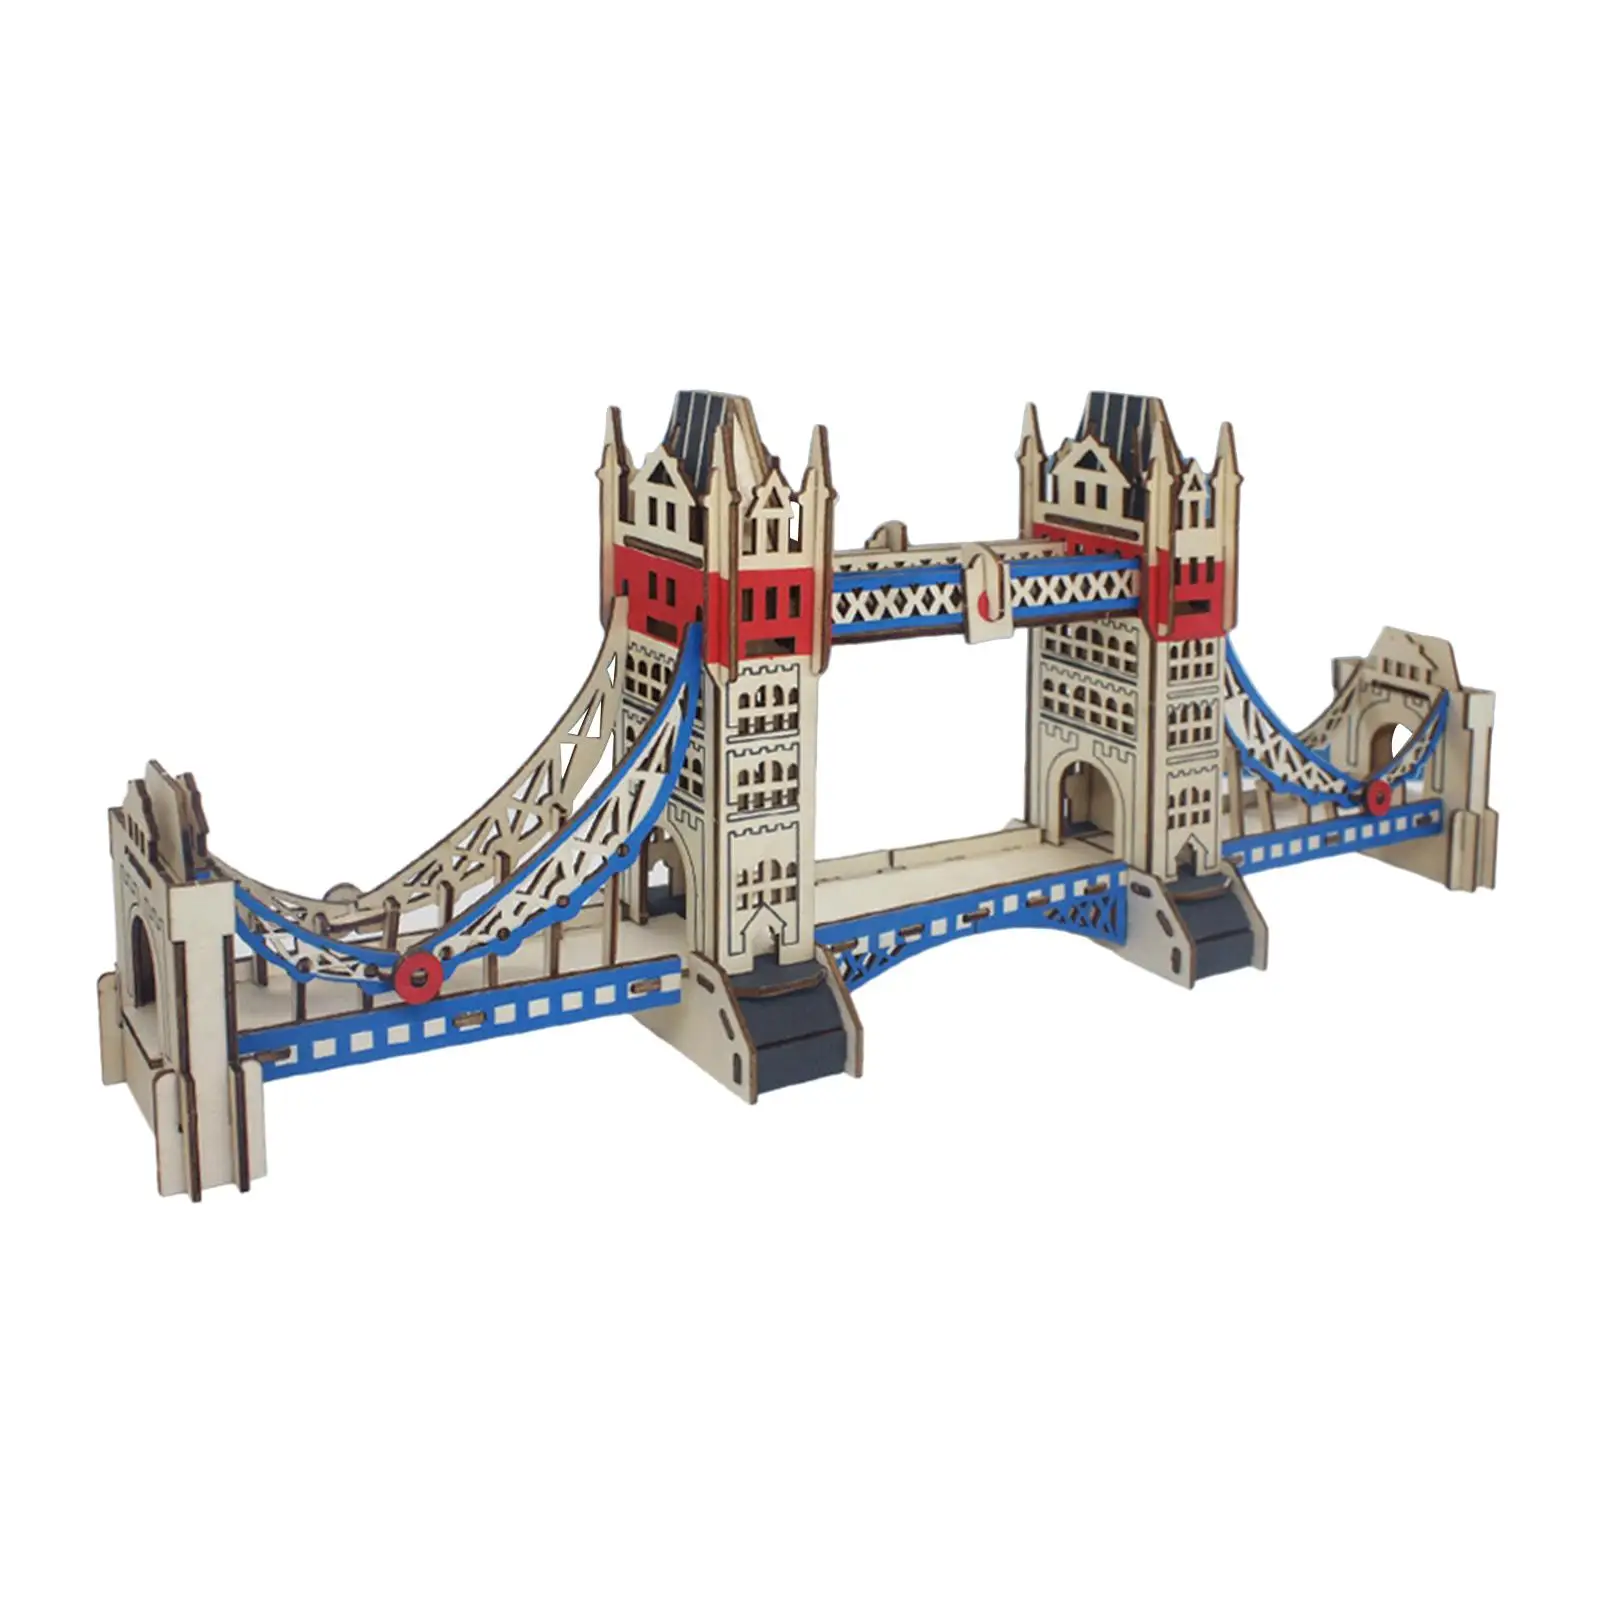 

3D Wooden Puzzle Building Kit Ornaments Famous Sites Modelling Kit Tower Bridge 3D Puzzles for Adults for Desktop Family Home